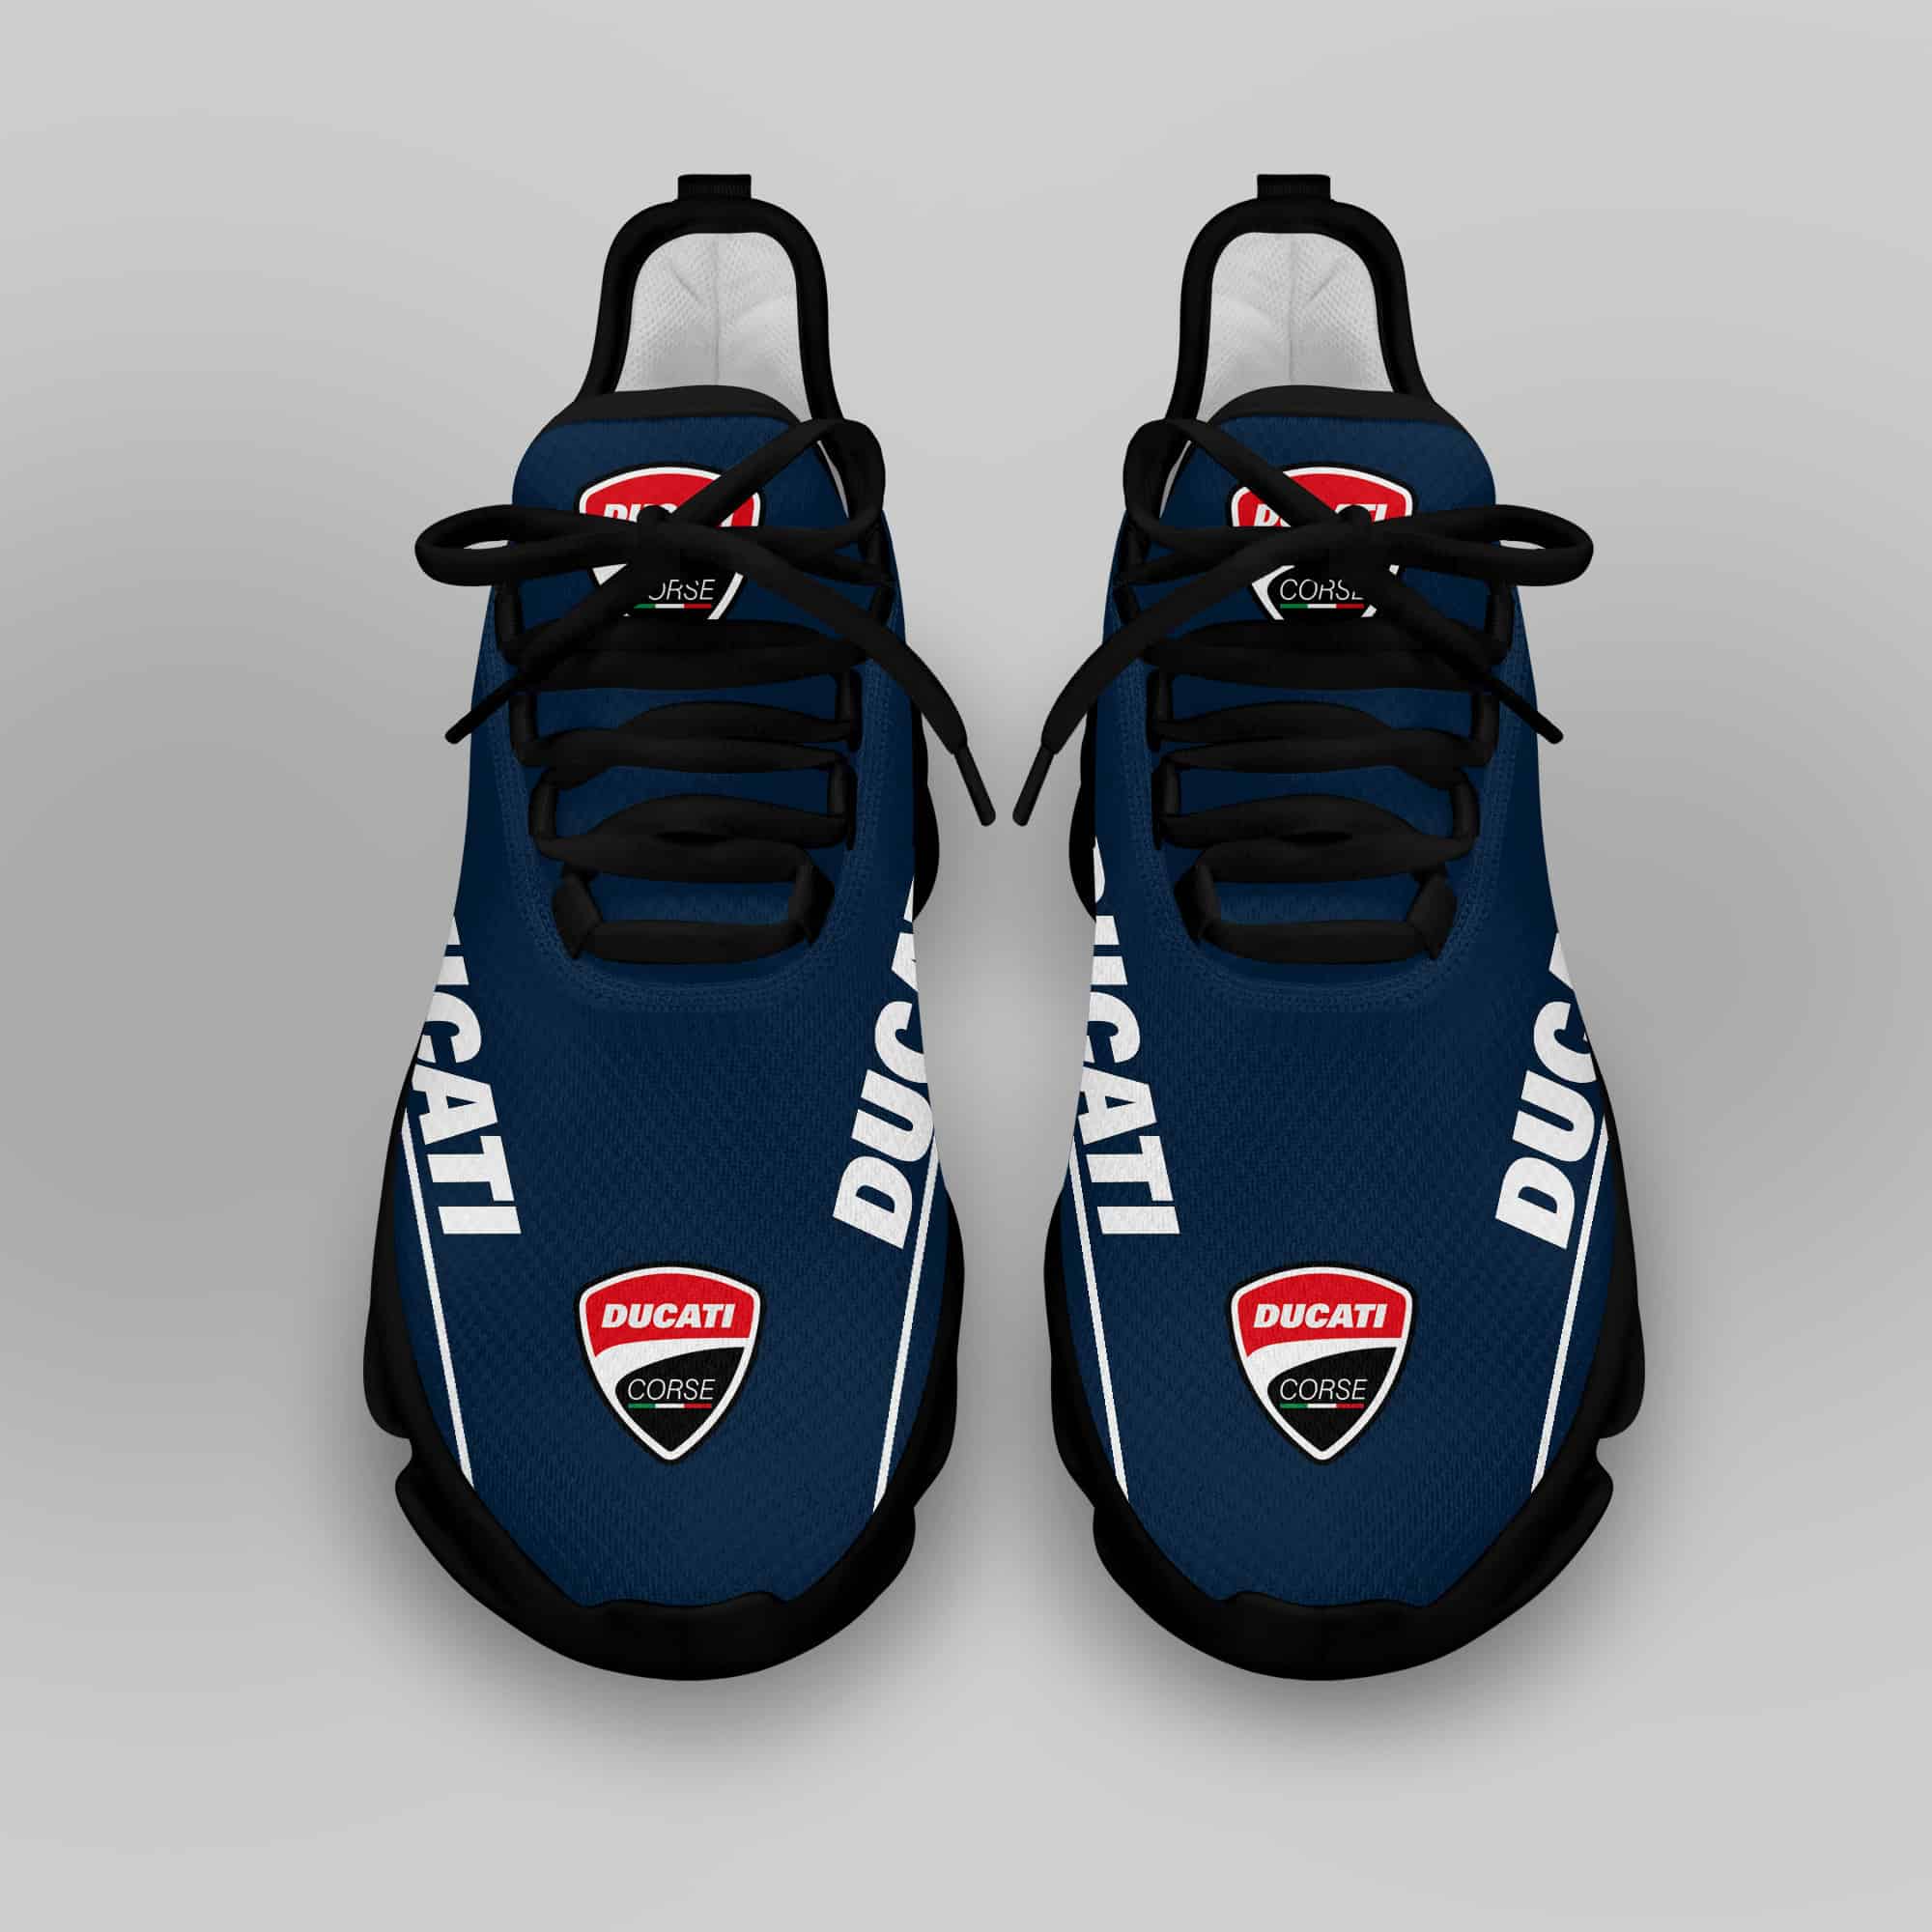 Ducati Racing Running Shoes Max Soul Shoes Sneakers Ver 22 4